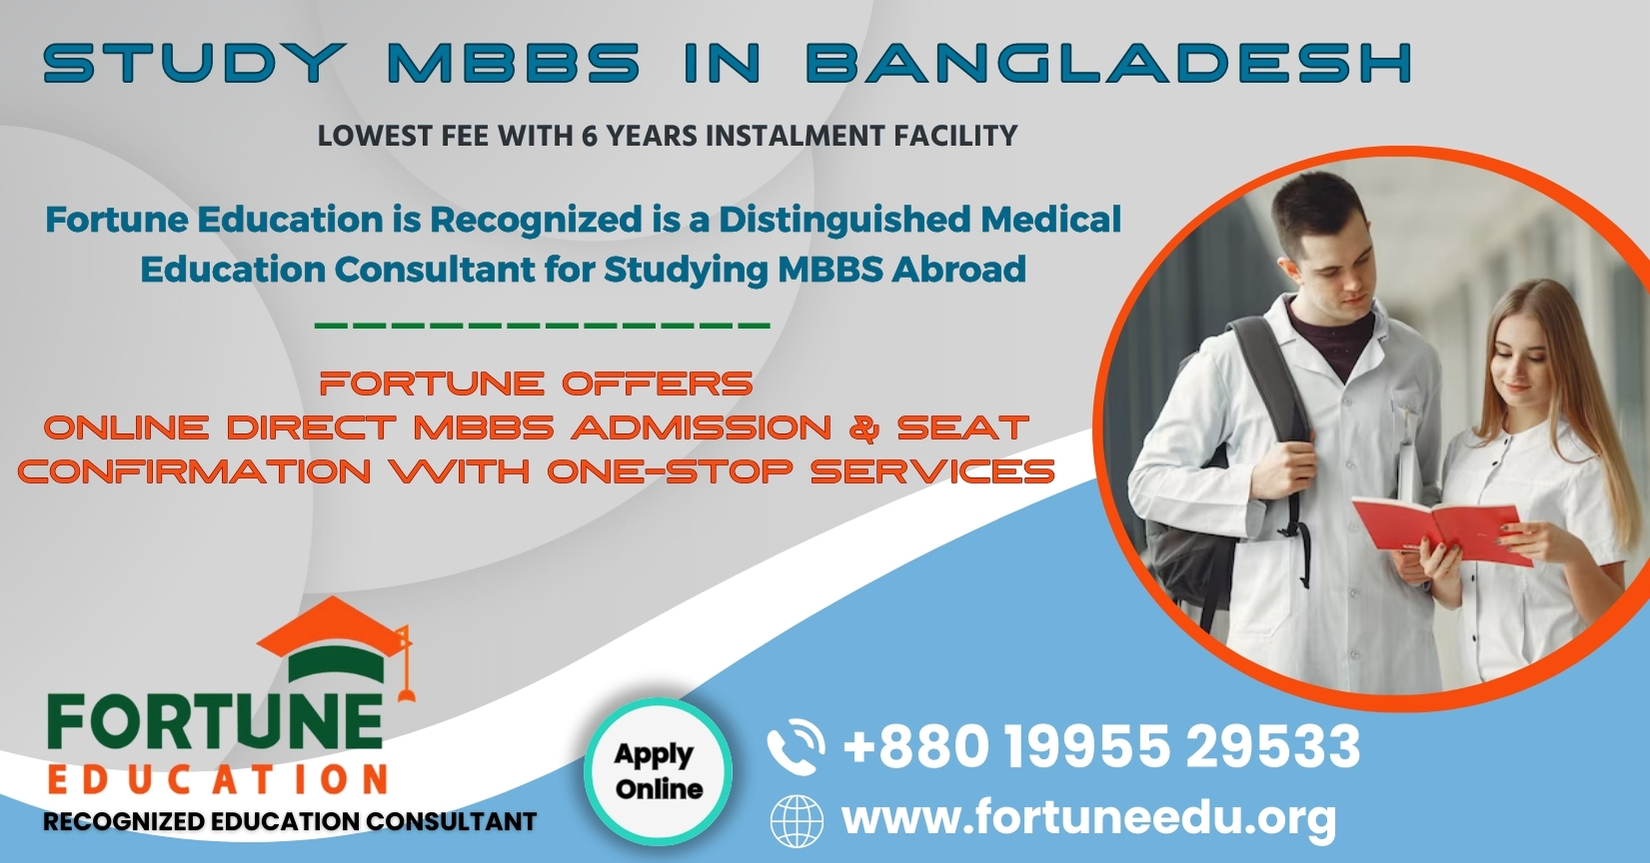 MBBS in Bangladesh Through Fortune Education